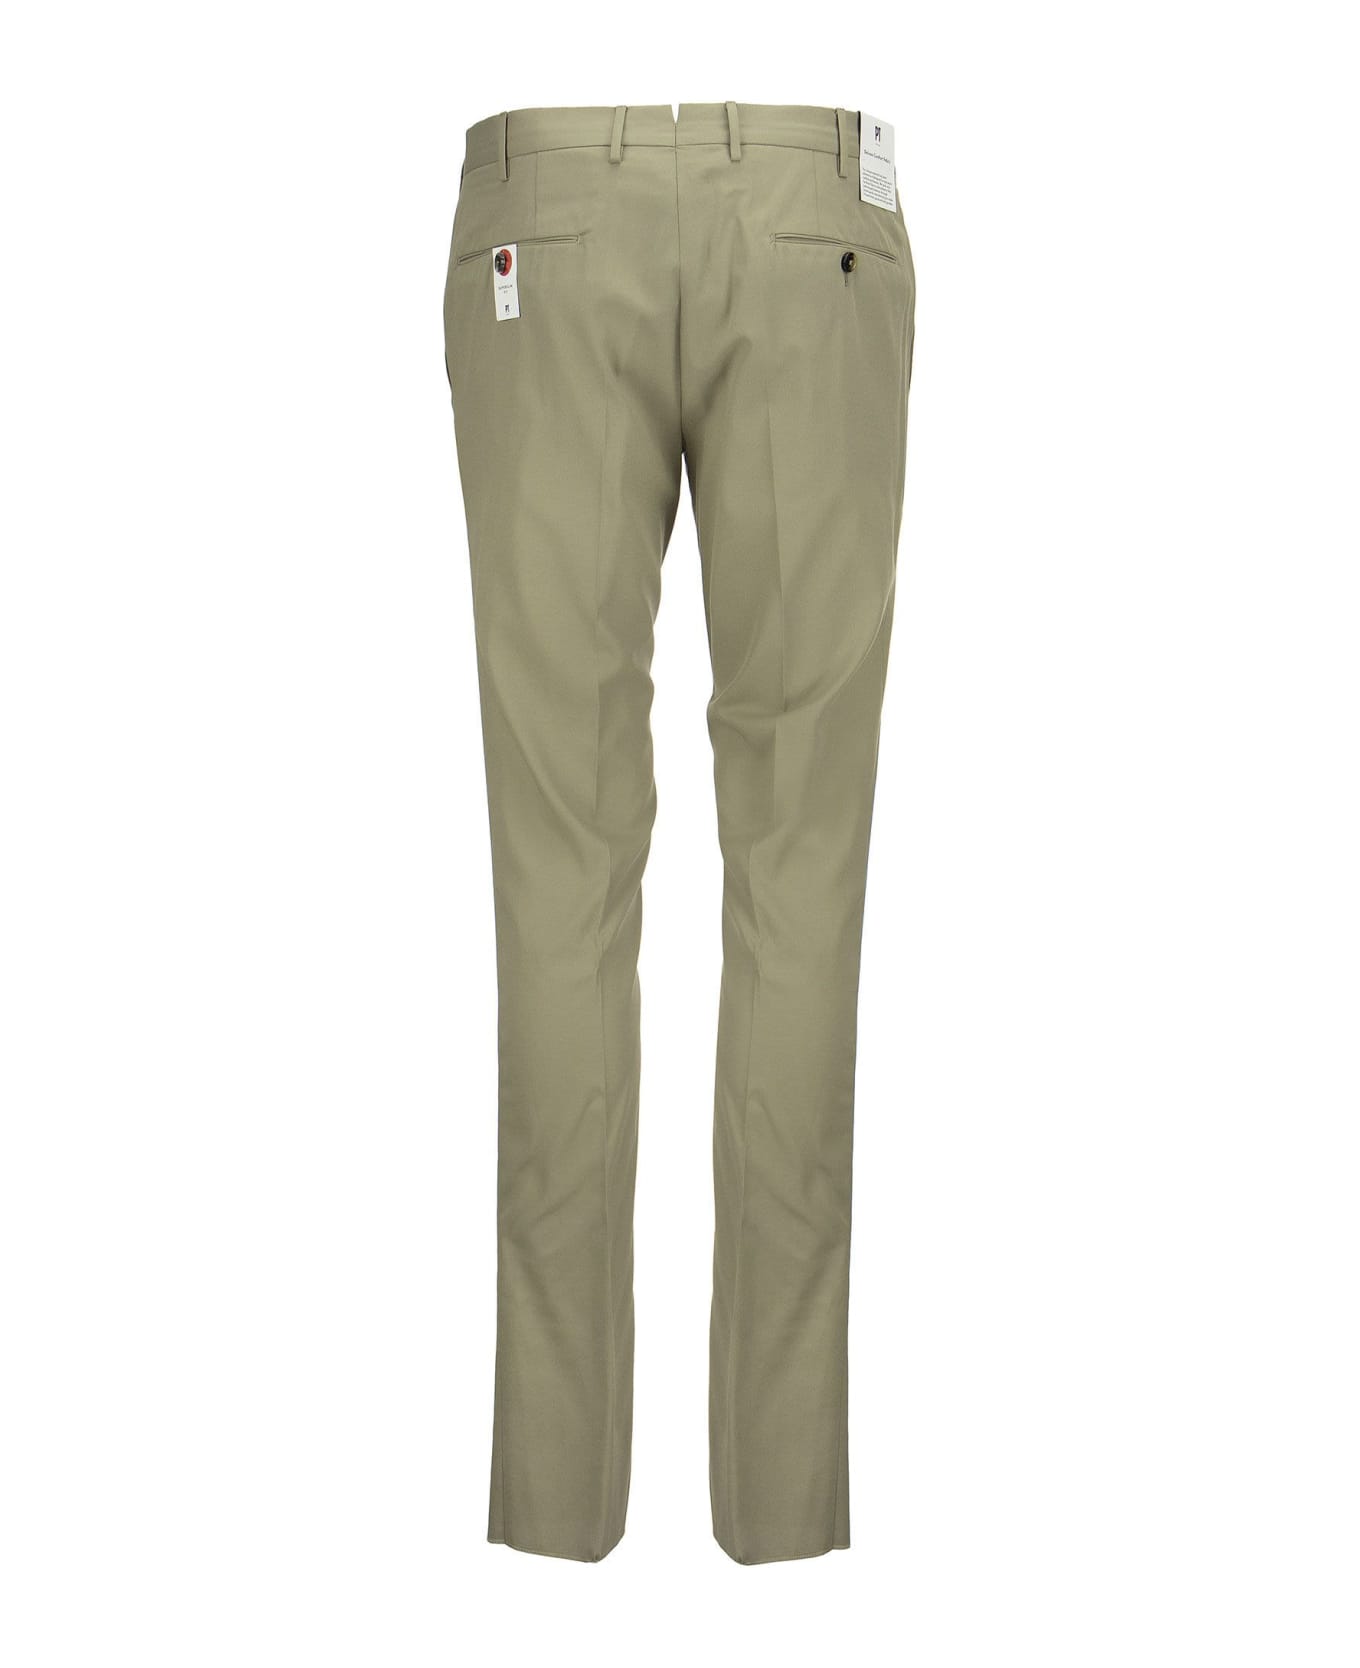 PT Torino Deluxe Cotton Pants - Mud